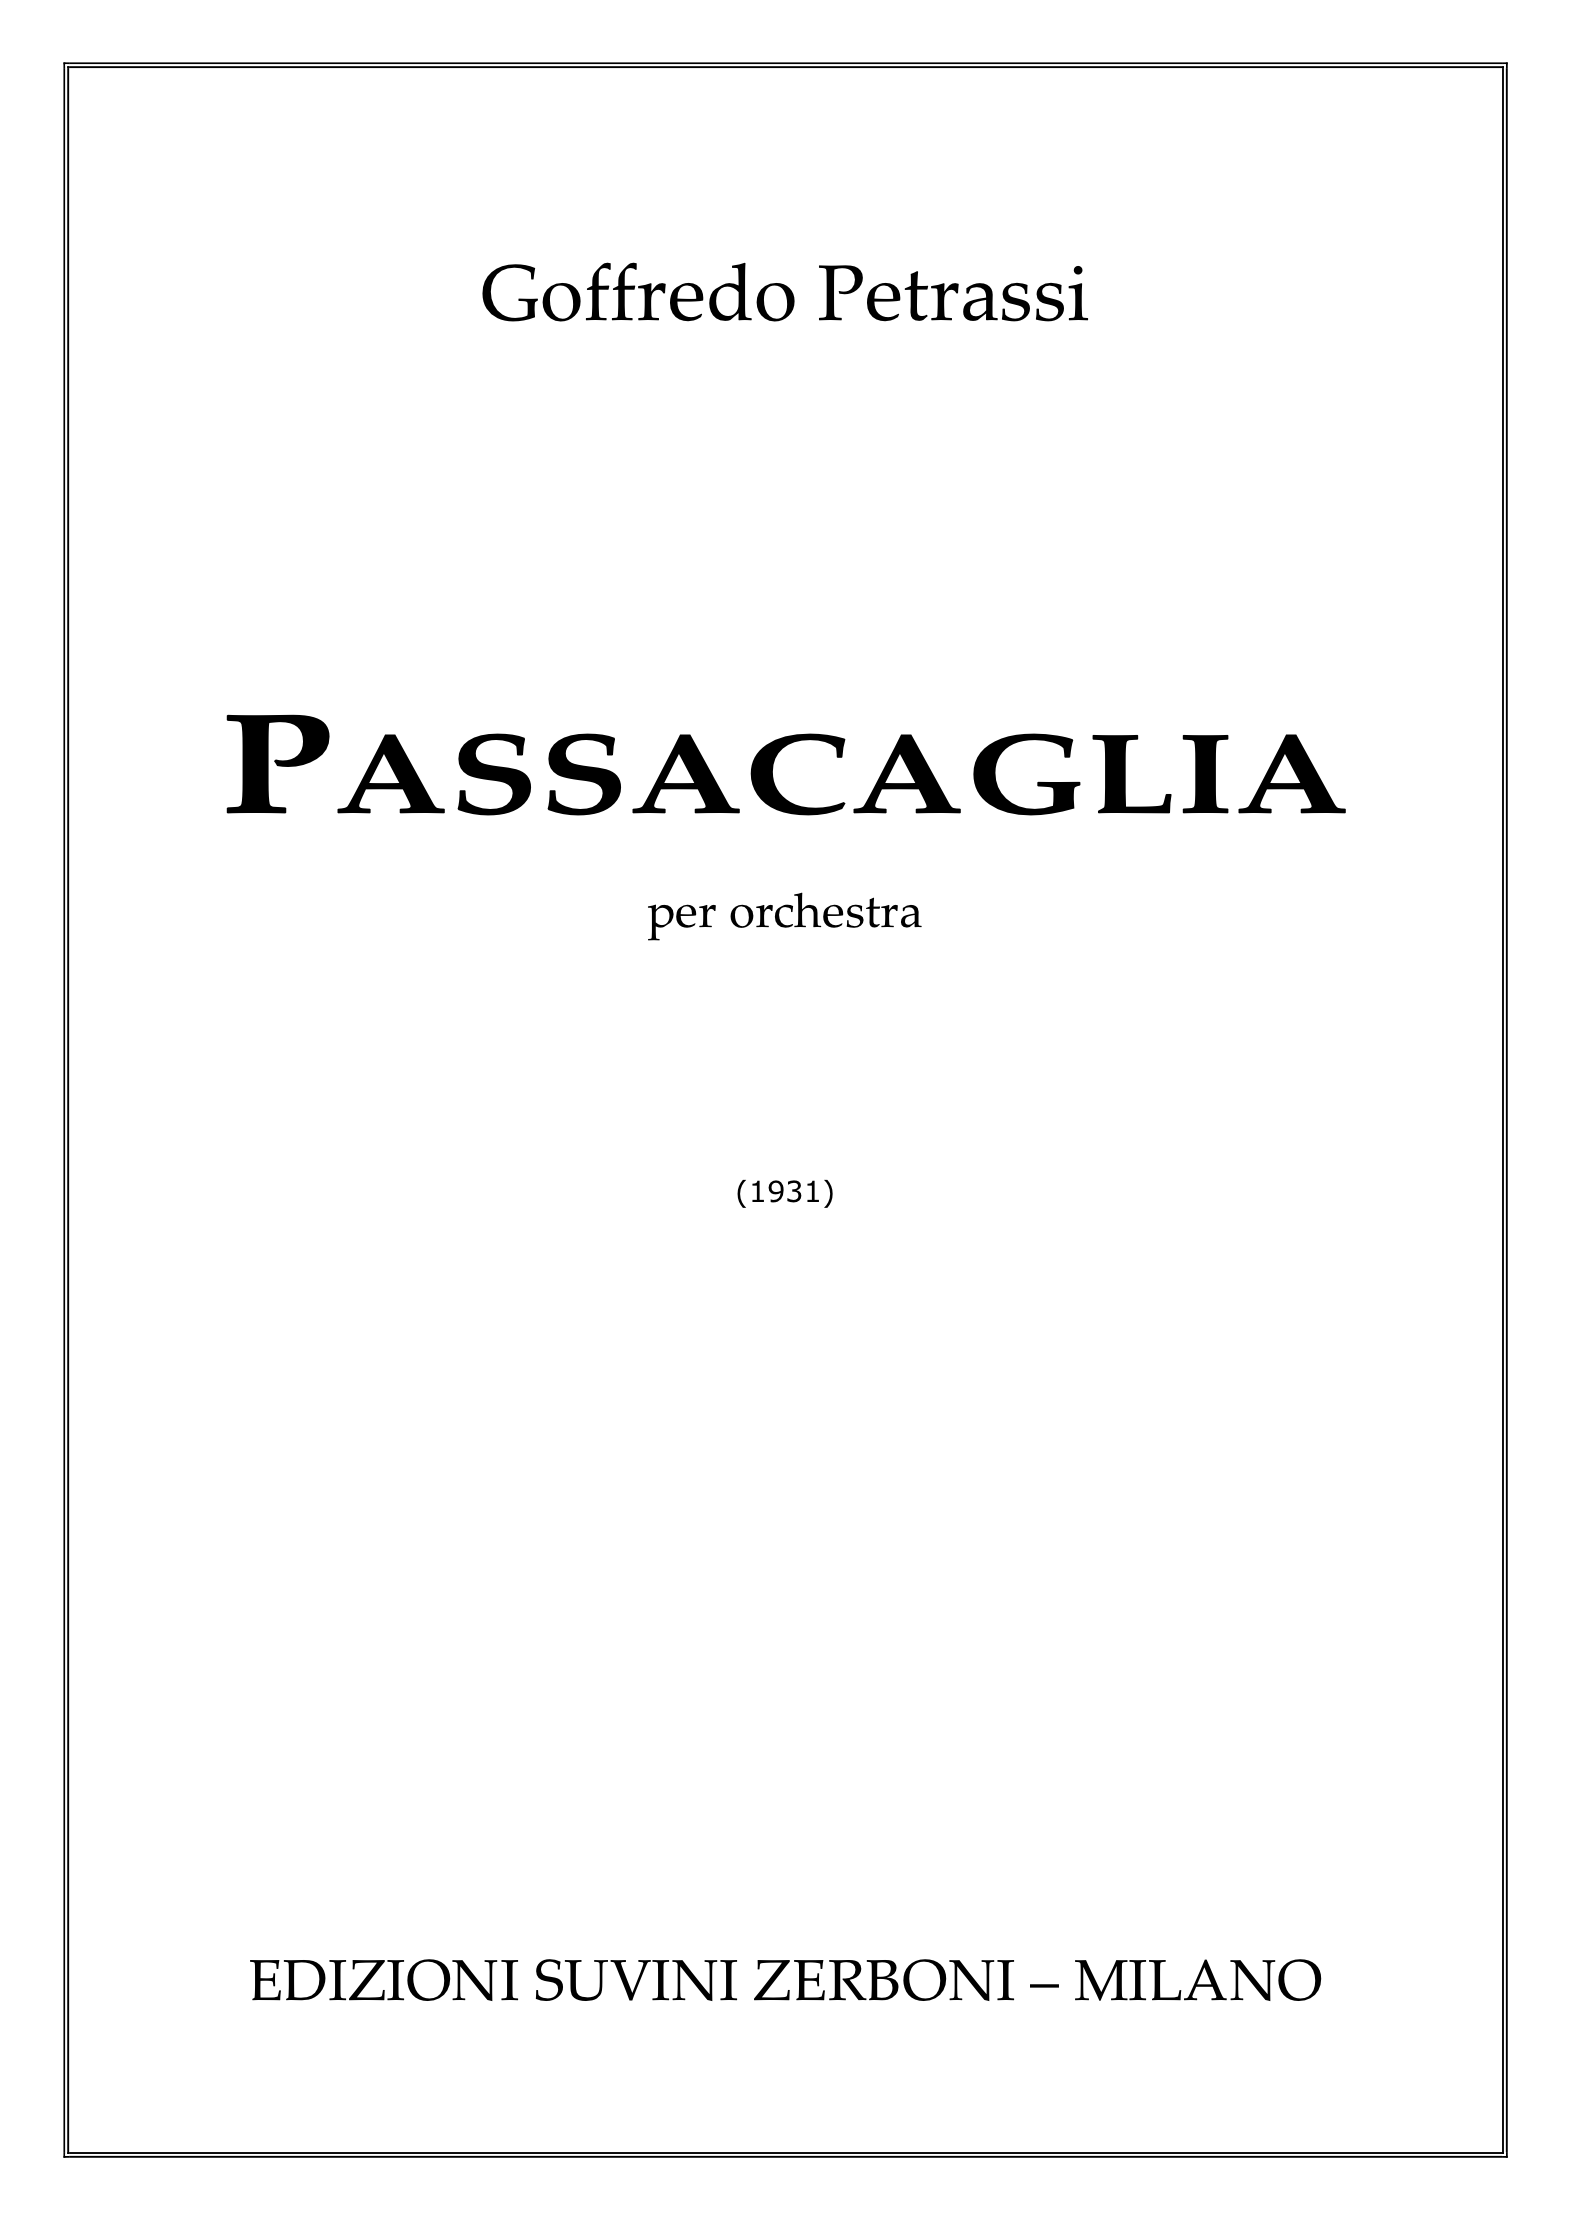 Passacaglia_Petrassi 1